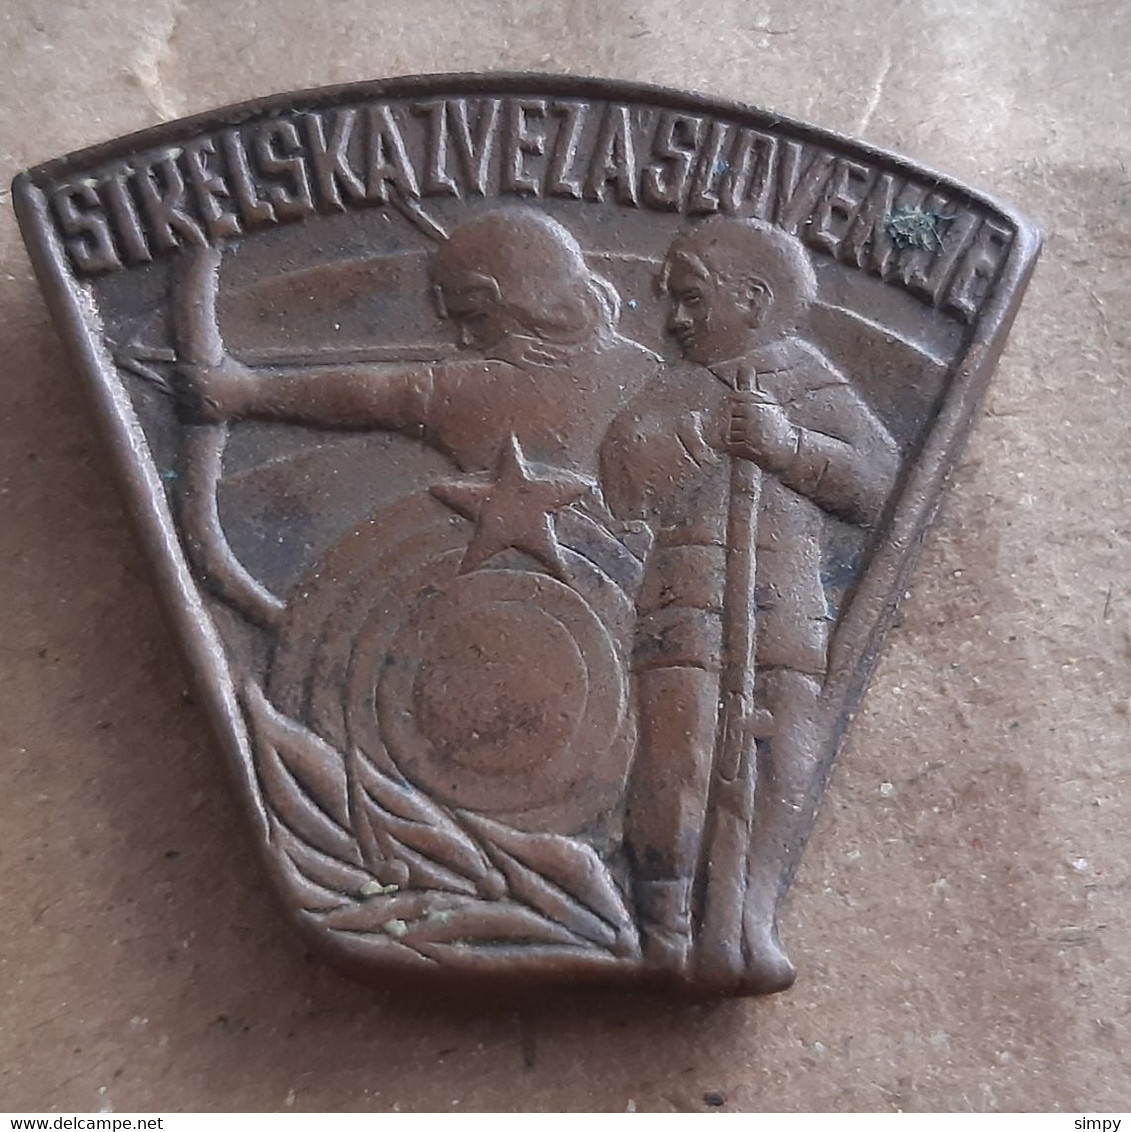 Archery Federation Of Slovenia Vintage Pin Badge Size 28x25mm - Archery